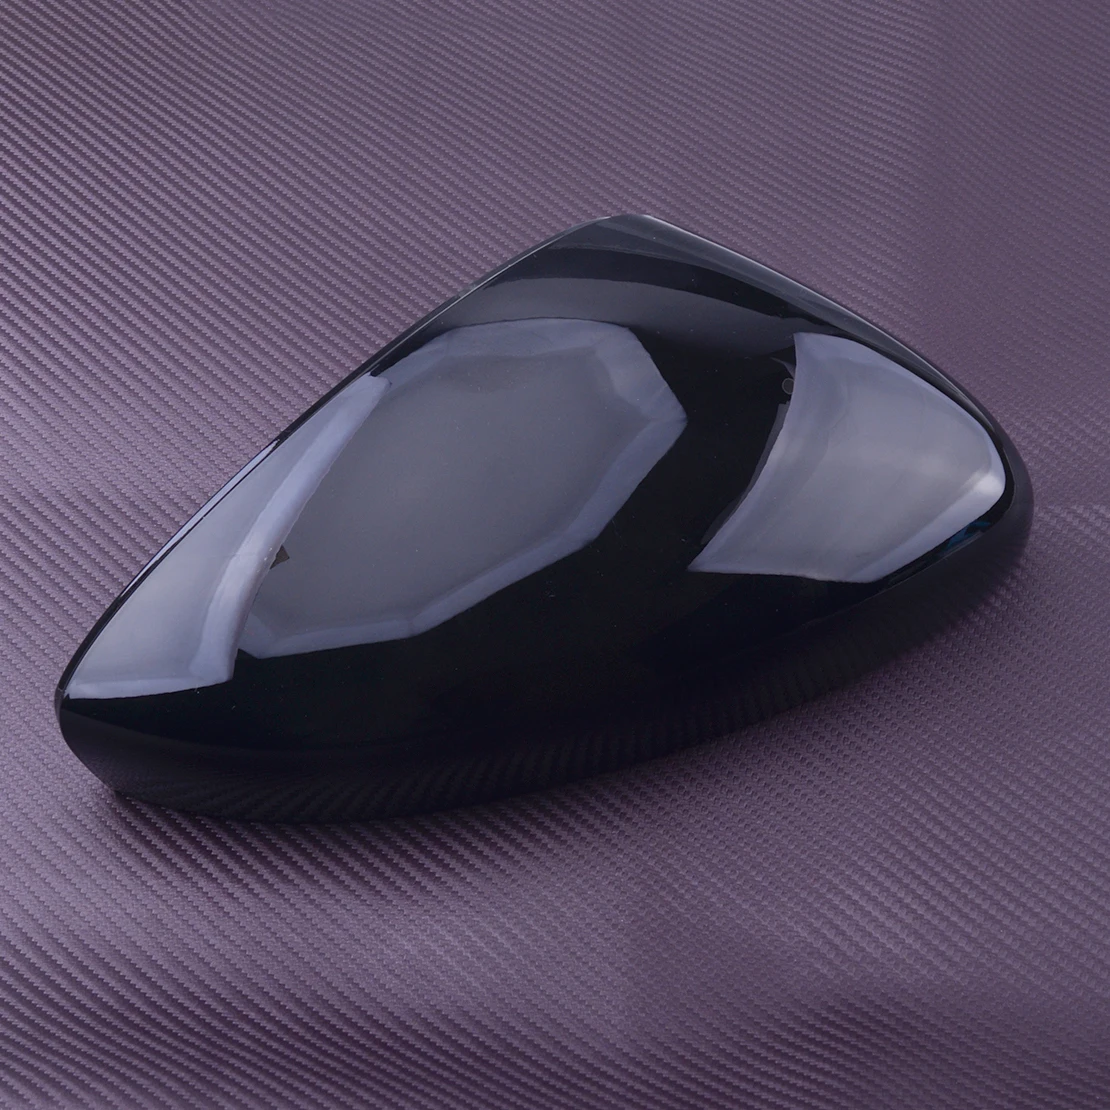 

Глянцевая черная наружная крышка для правого бокового зеркала заднего вида, Накладка для крышки для Honda Accord 2021 2020 2019 2018 из АБС-пластика